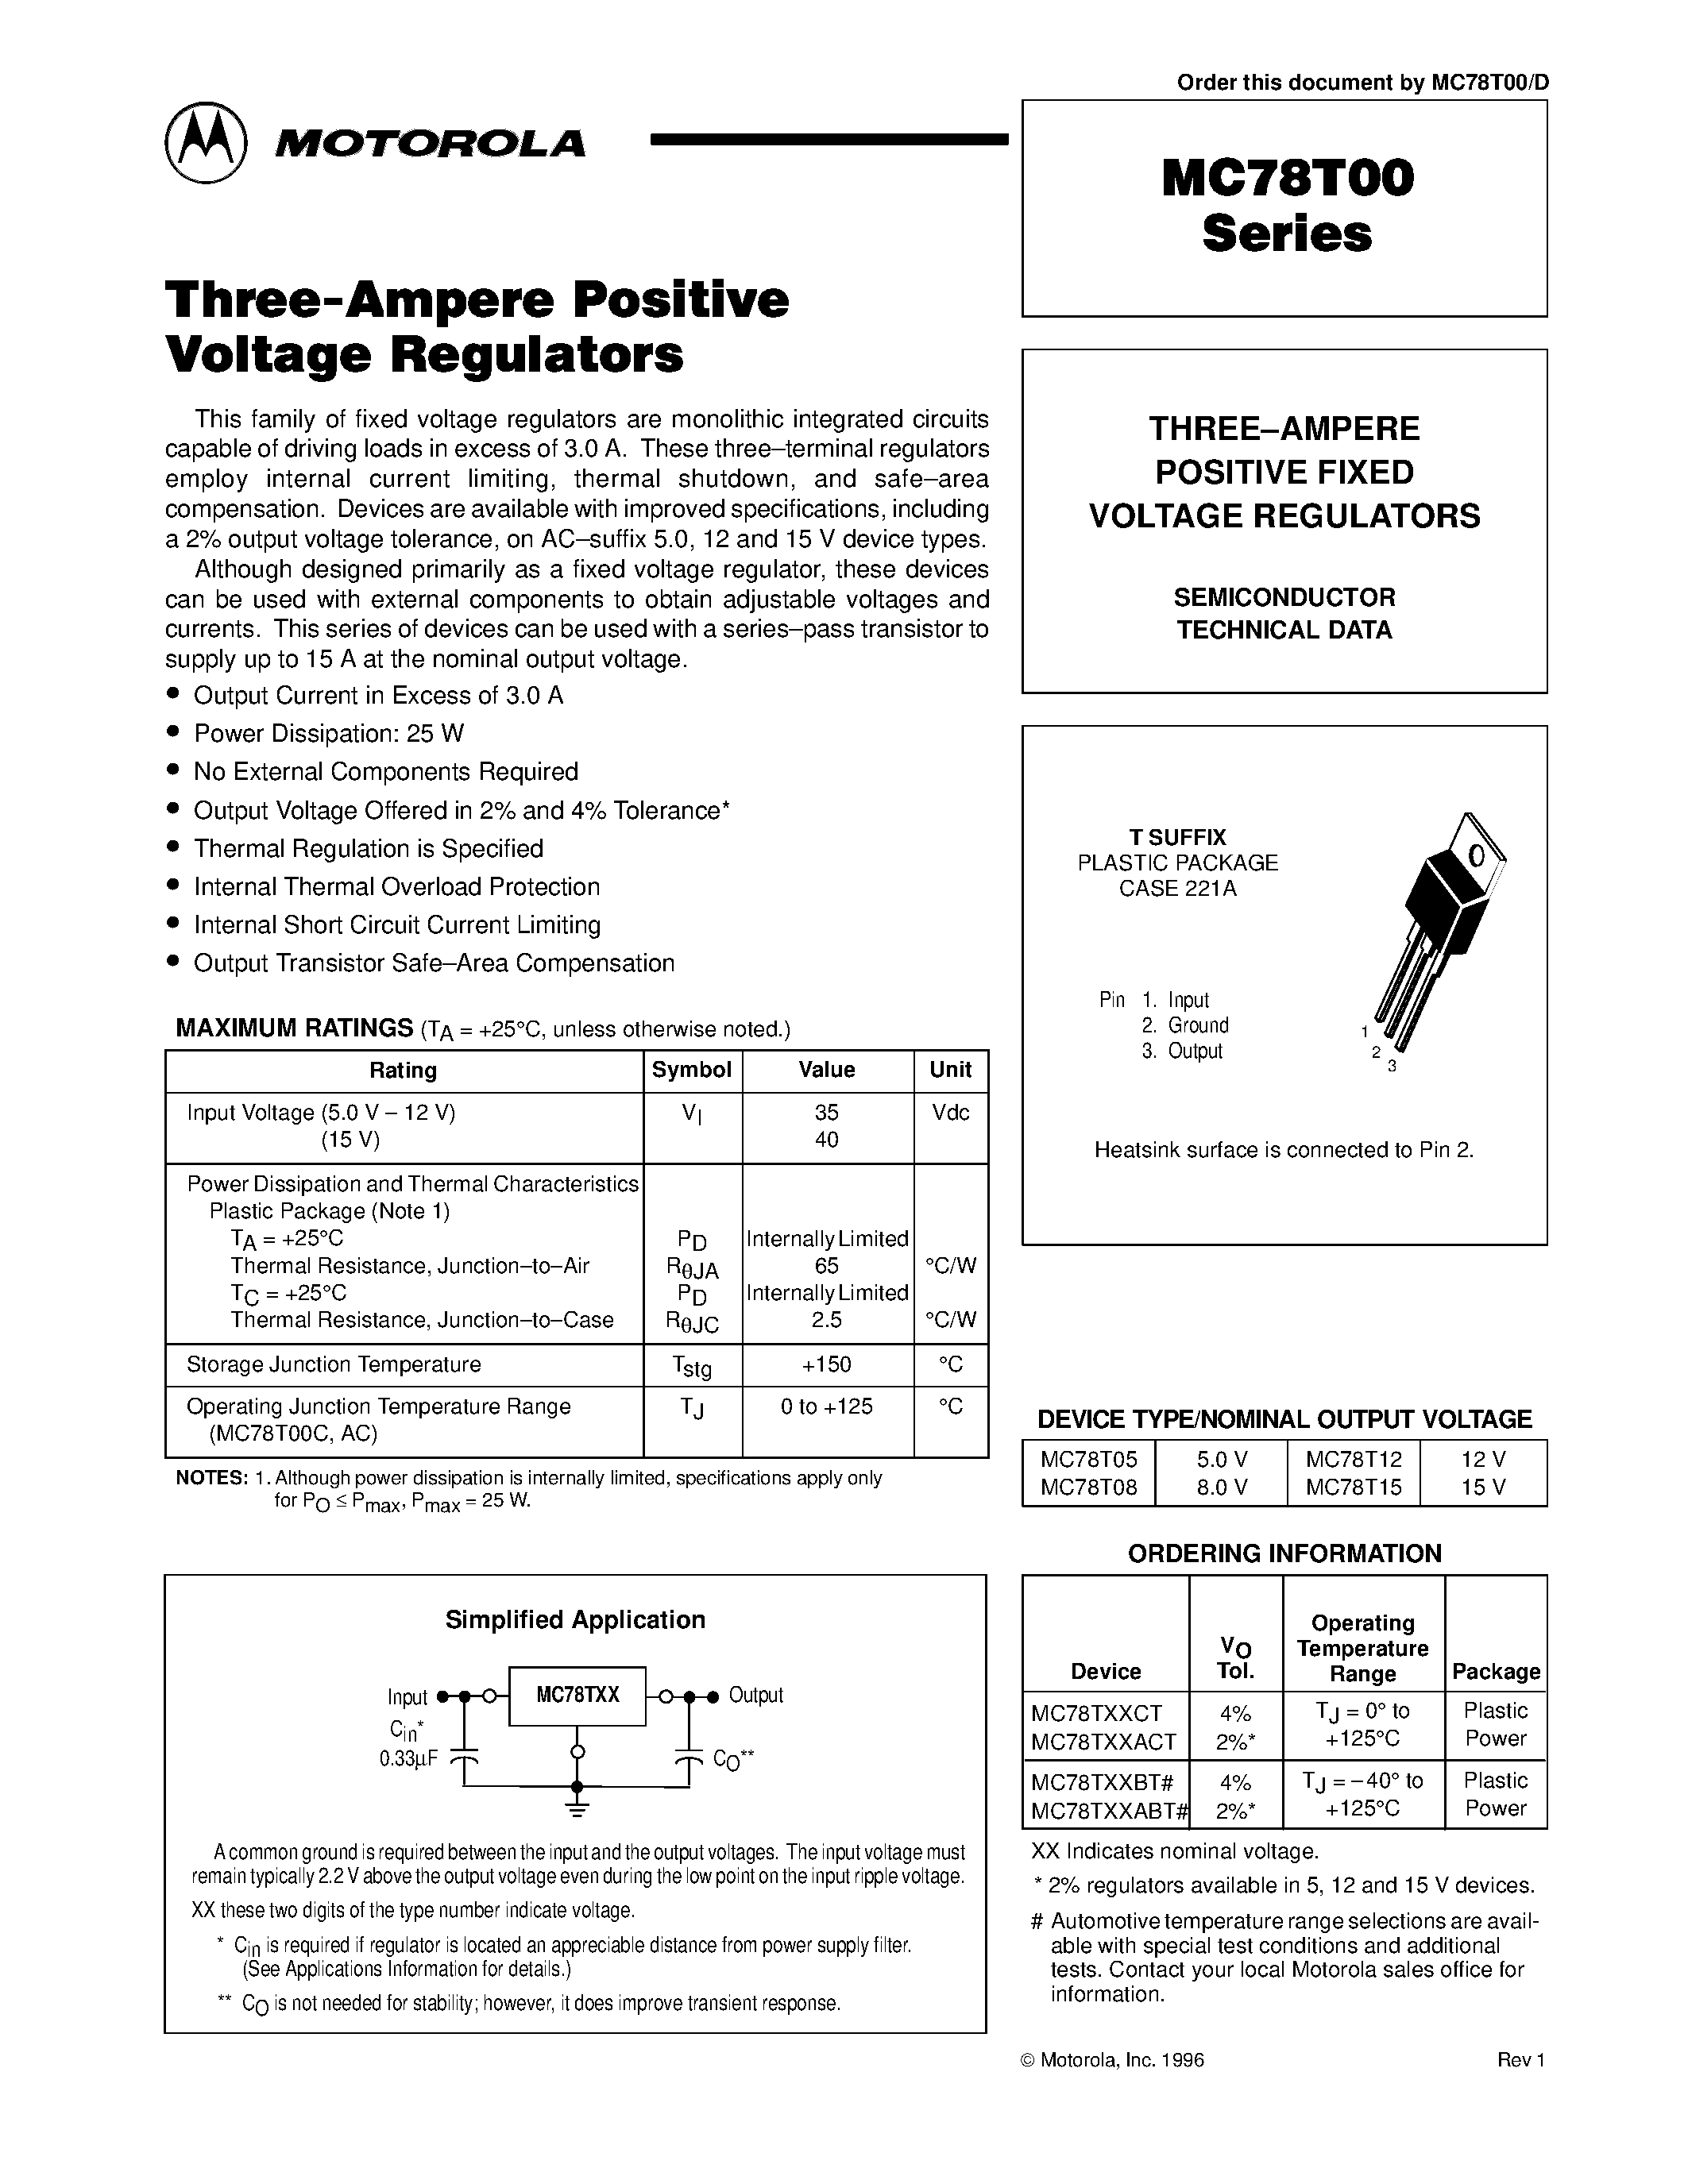 Даташит MC78T05ACT - THREE-AMPERE POSITIVE FIXED VOLTAGE REGULATORS страница 1